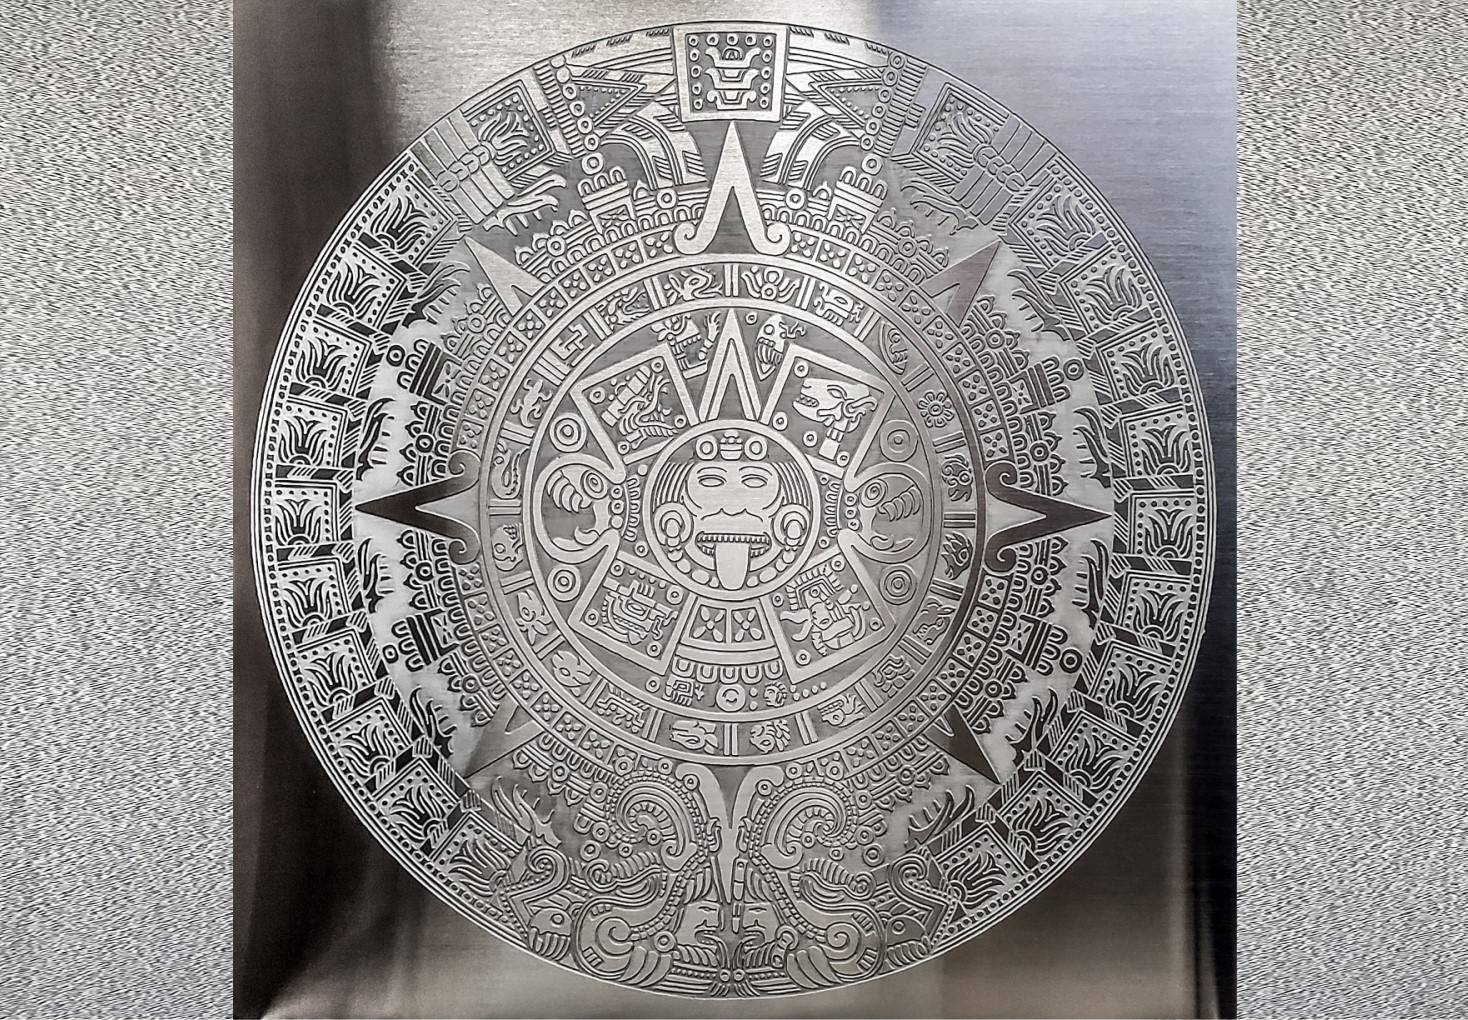 Mayan calendar engraved deep on stainless steel